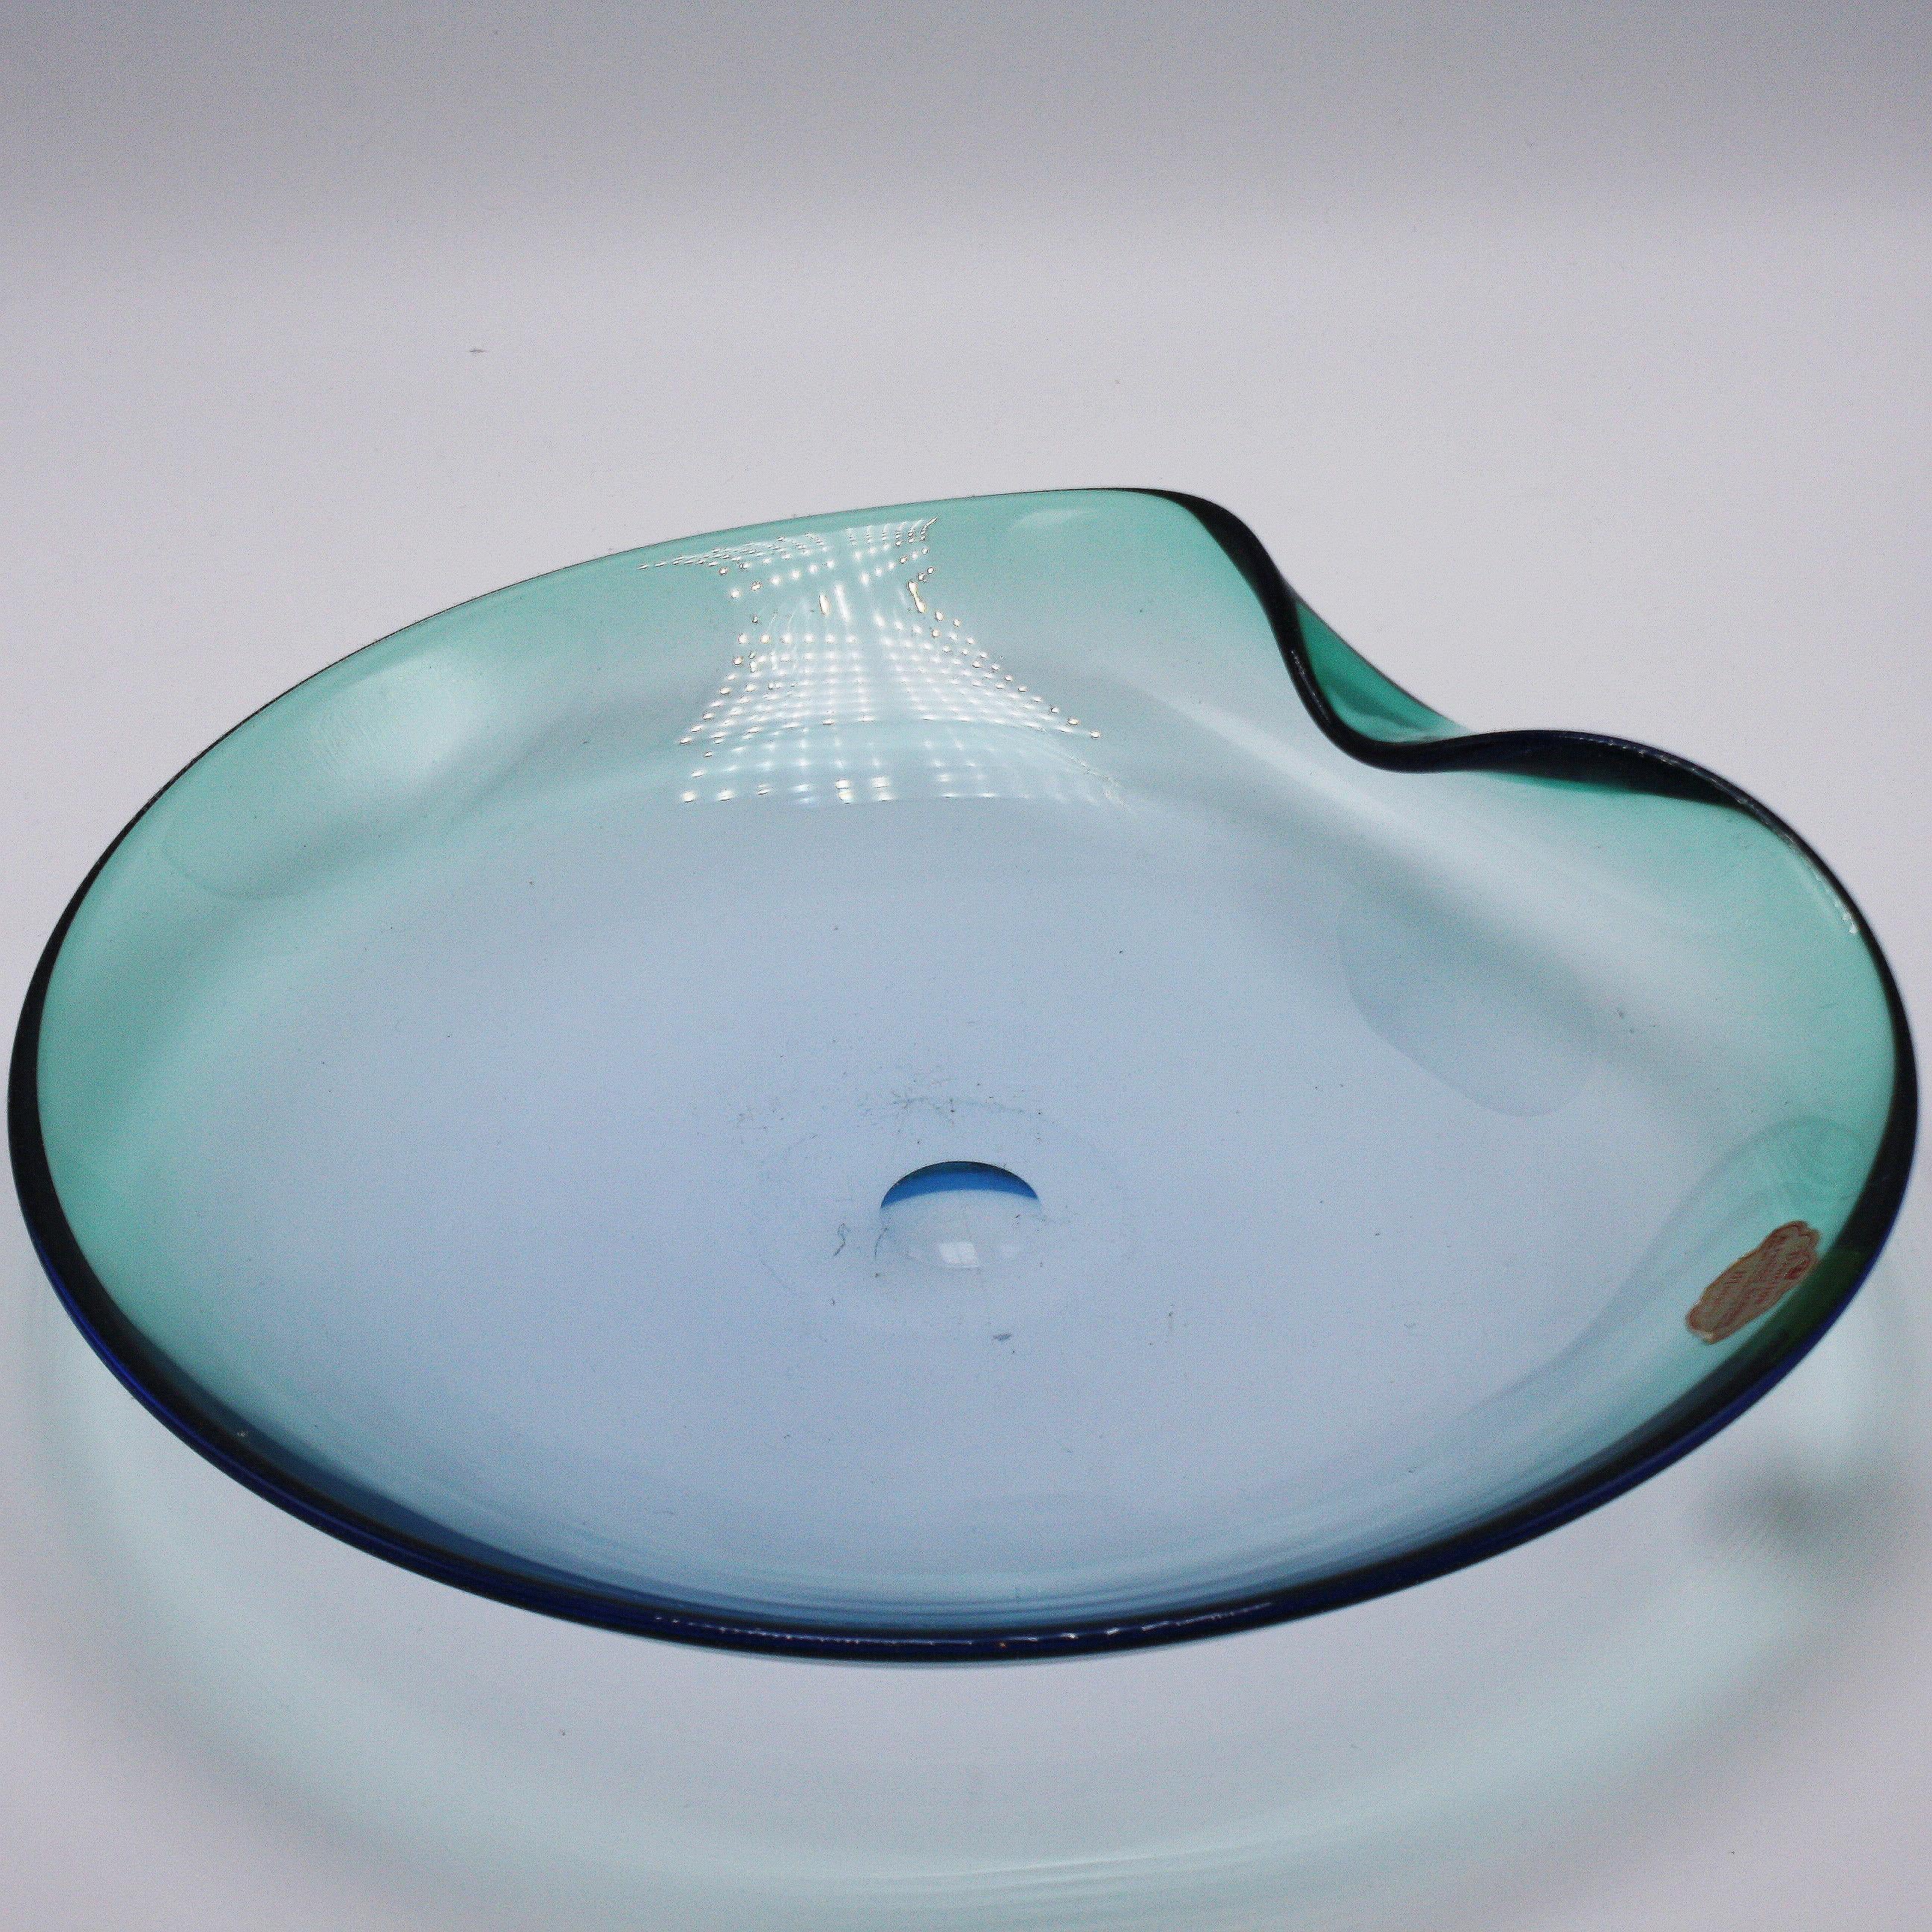 Tinted blue Murano glass bowl by Barbini, circa 1930
$575.